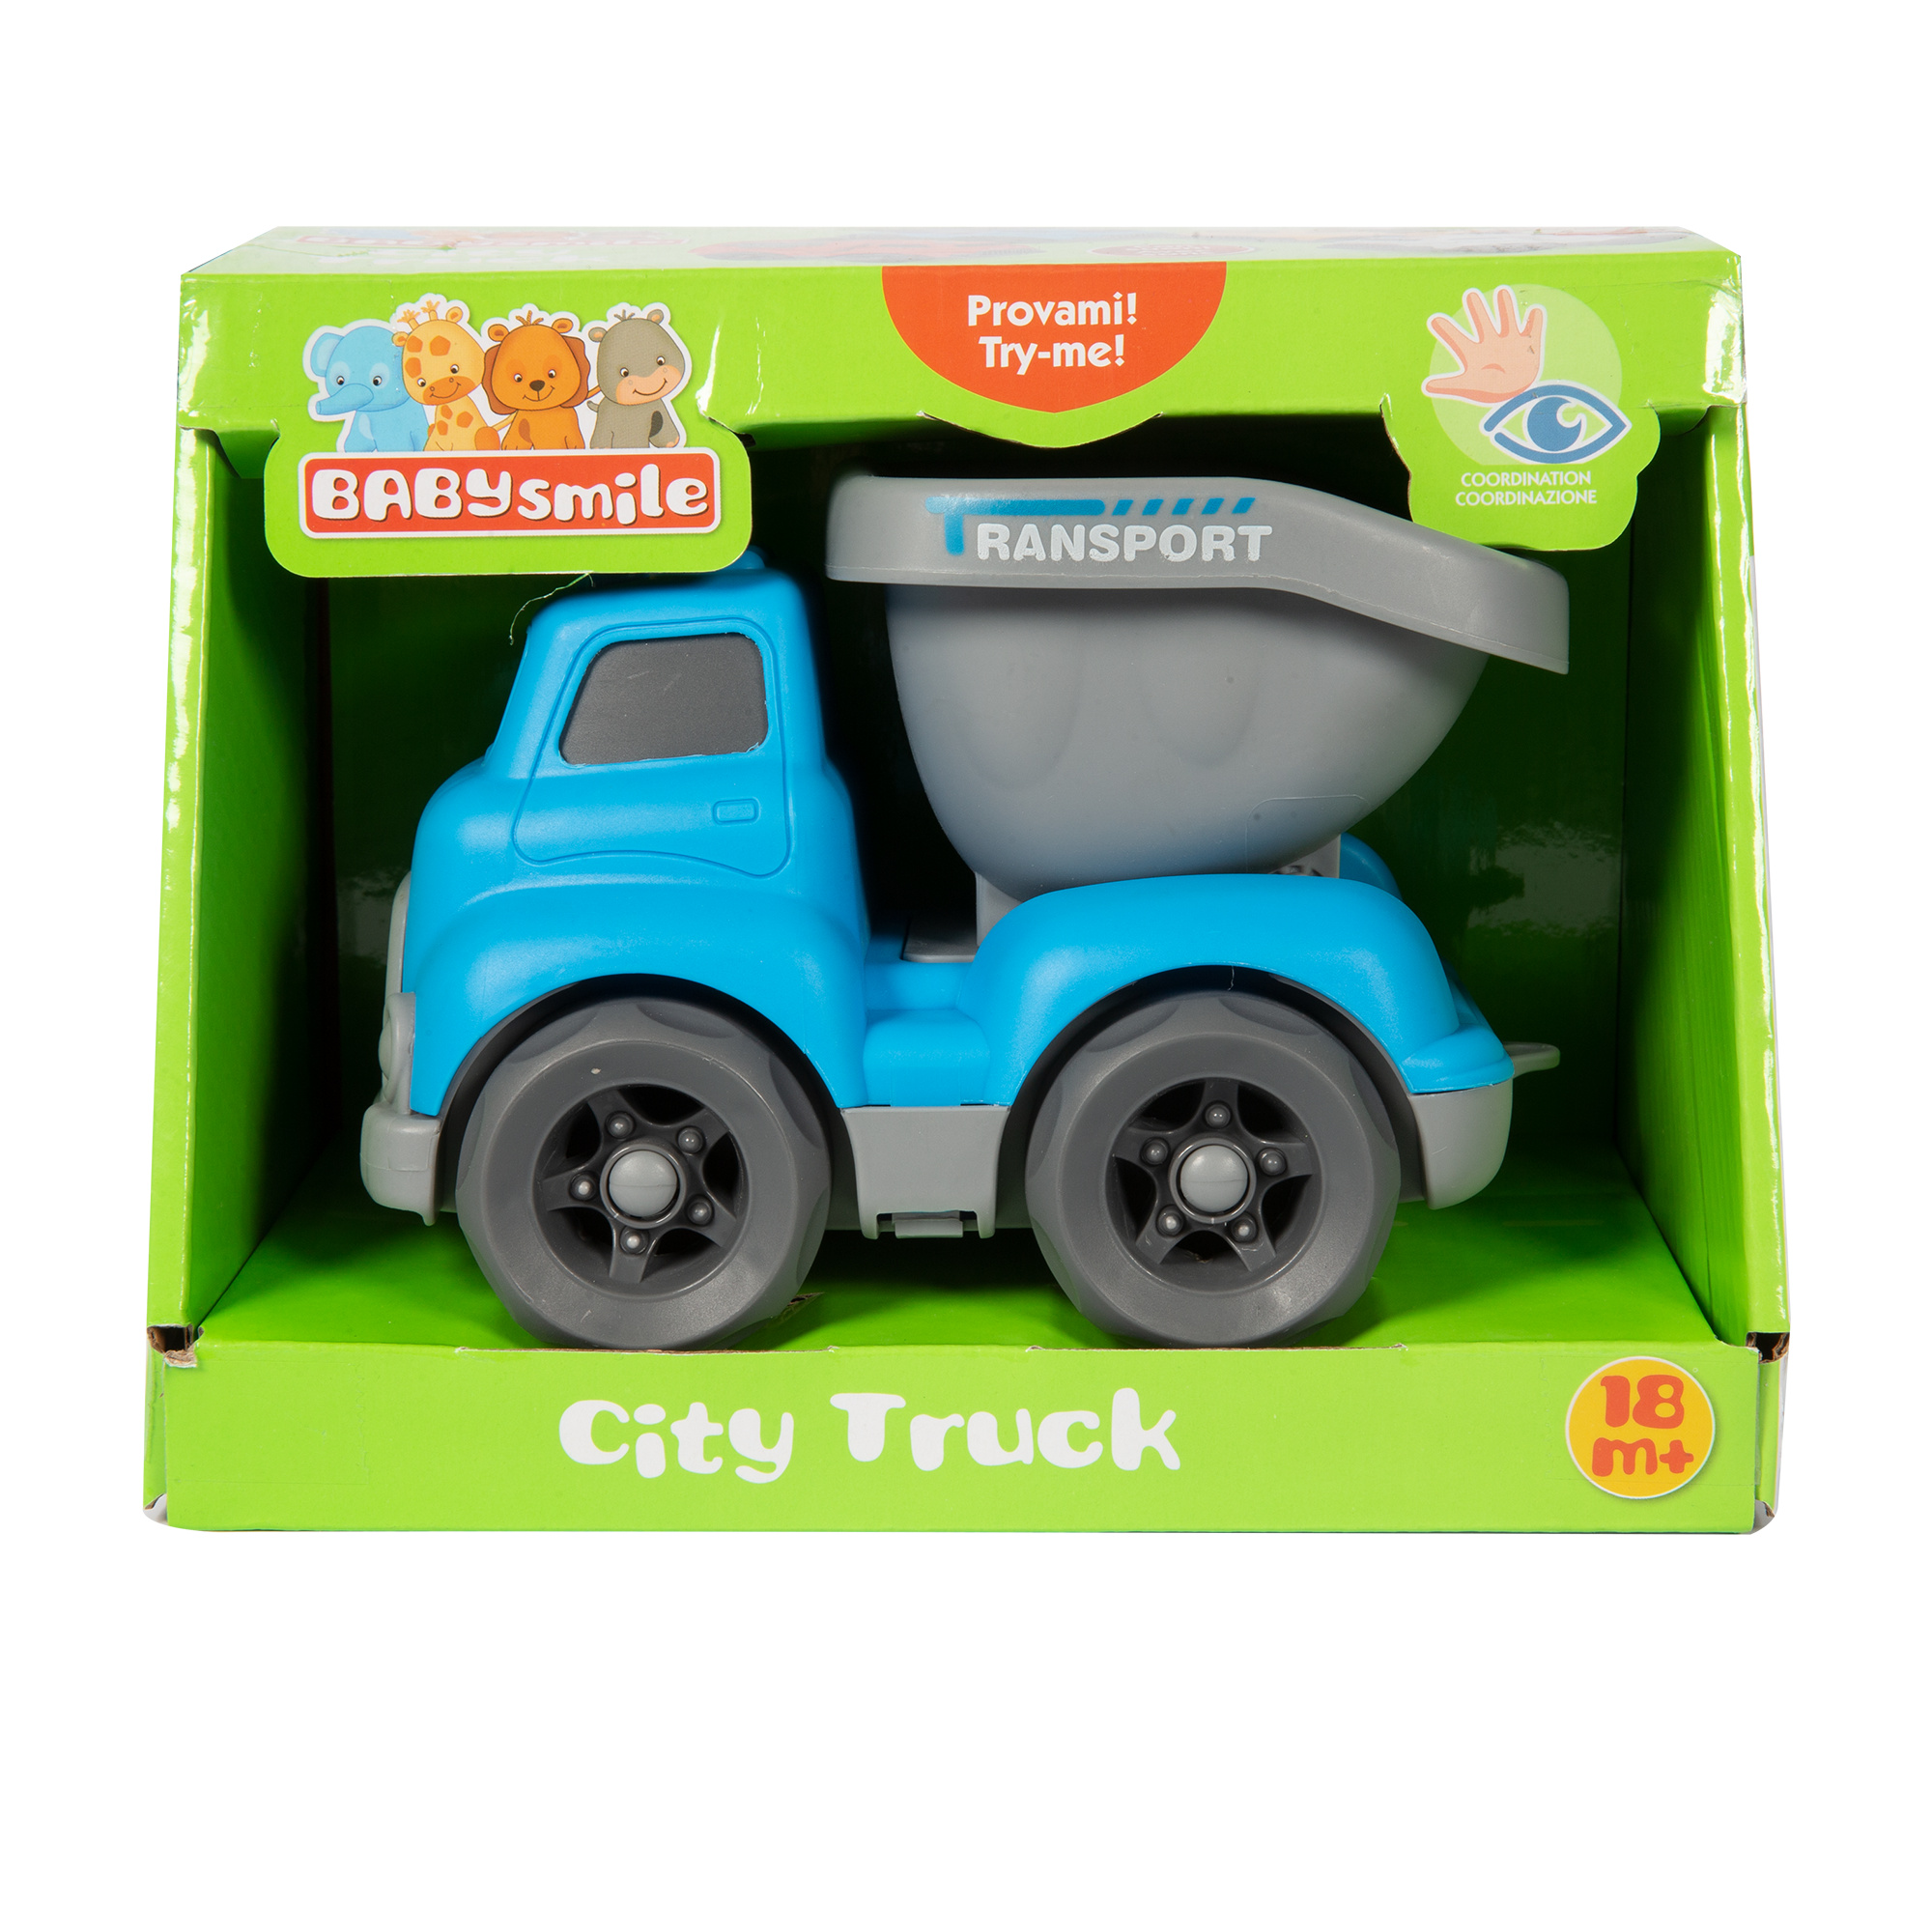 Veicoli - city truck - assortiti - baby smile - Baby Smile